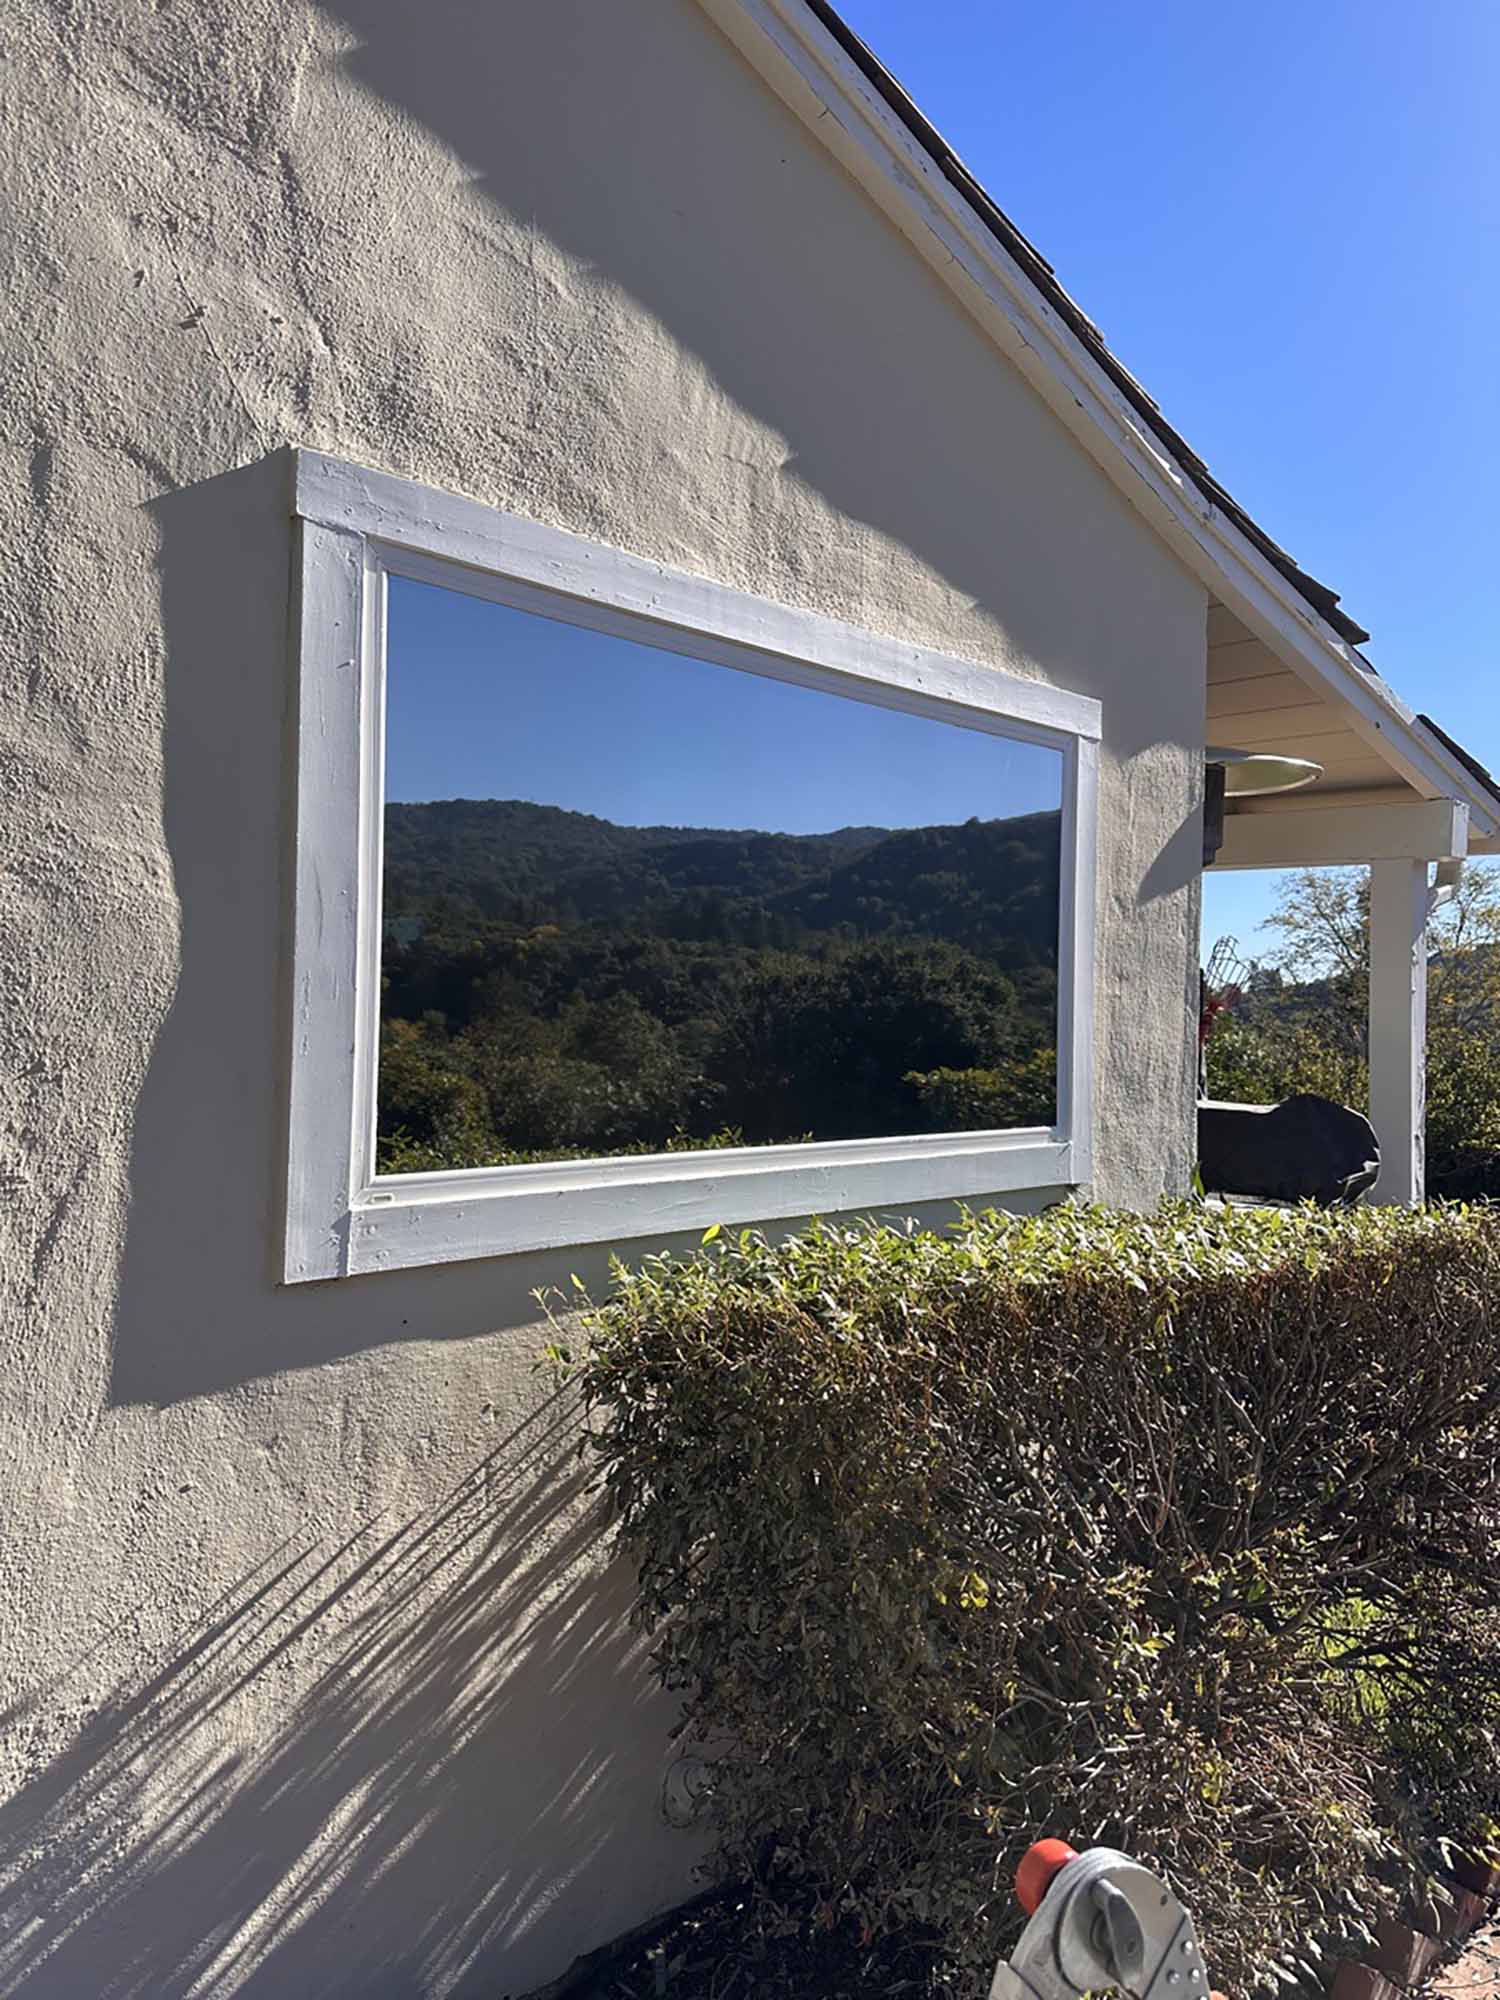 ClimatePro Installs Heat and Glare Reducing Window Film in Los Altos Hills. Get a free estimate in the San Francisco Bay Area.